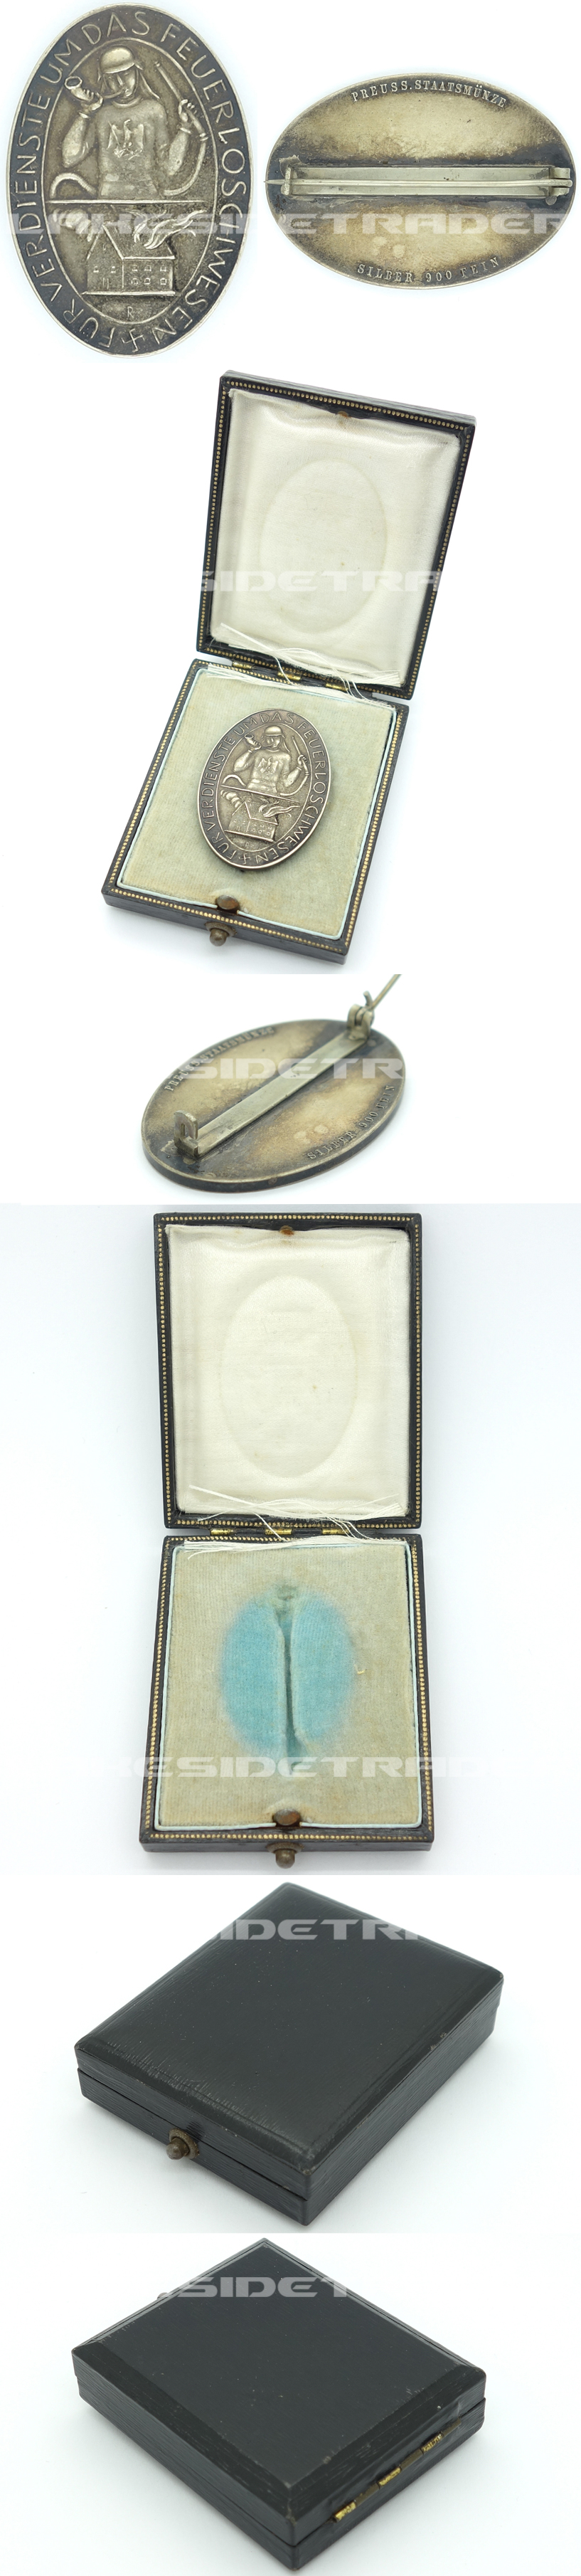 Cased Fireman’s Commemorative Merits Medal